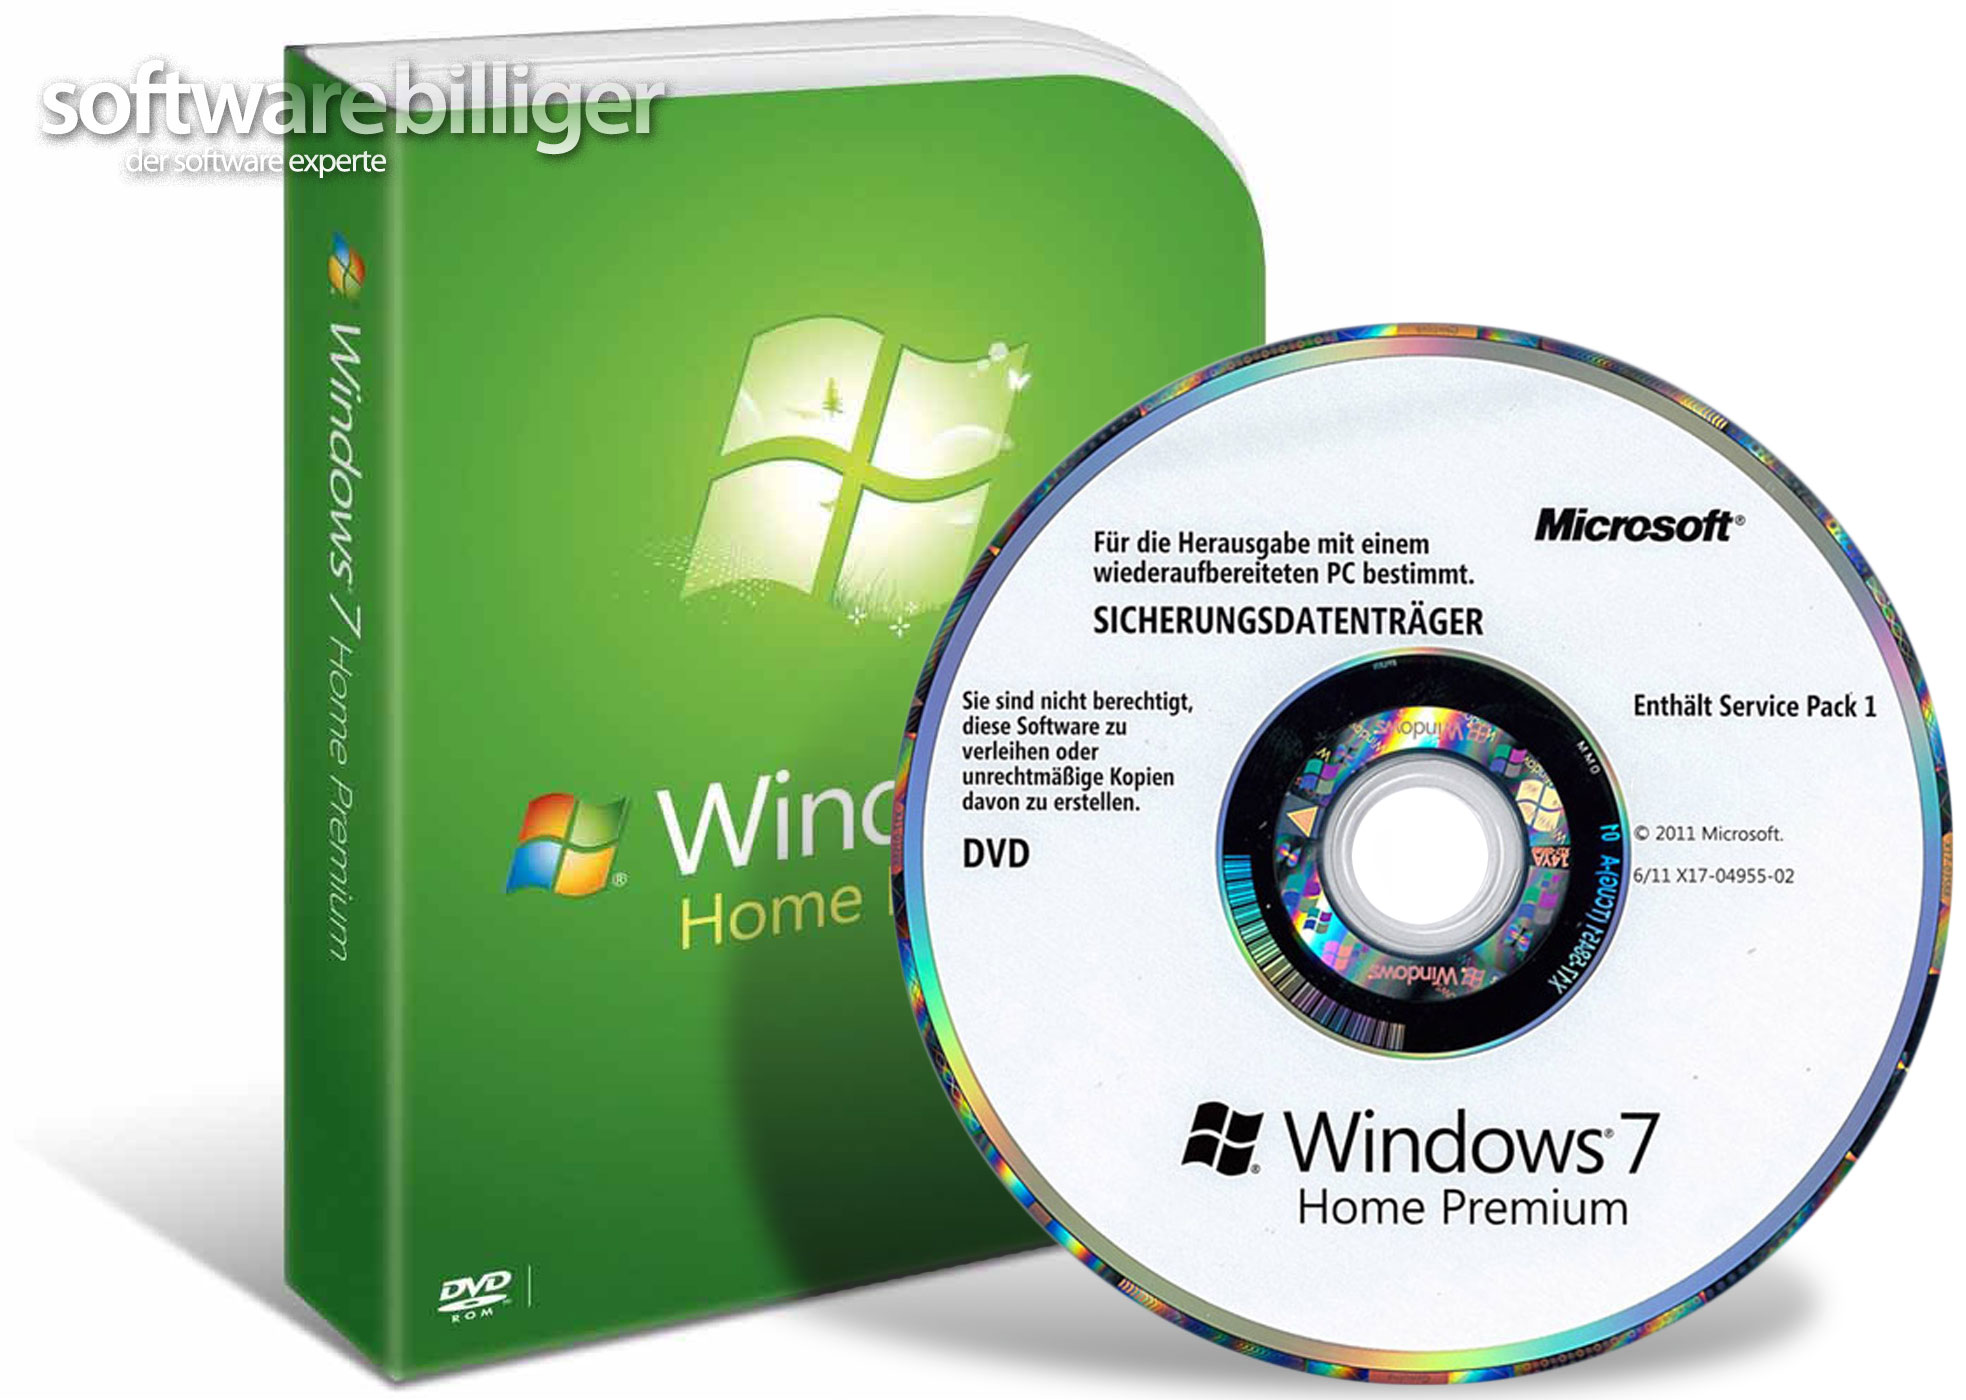 Windows 7 обложка